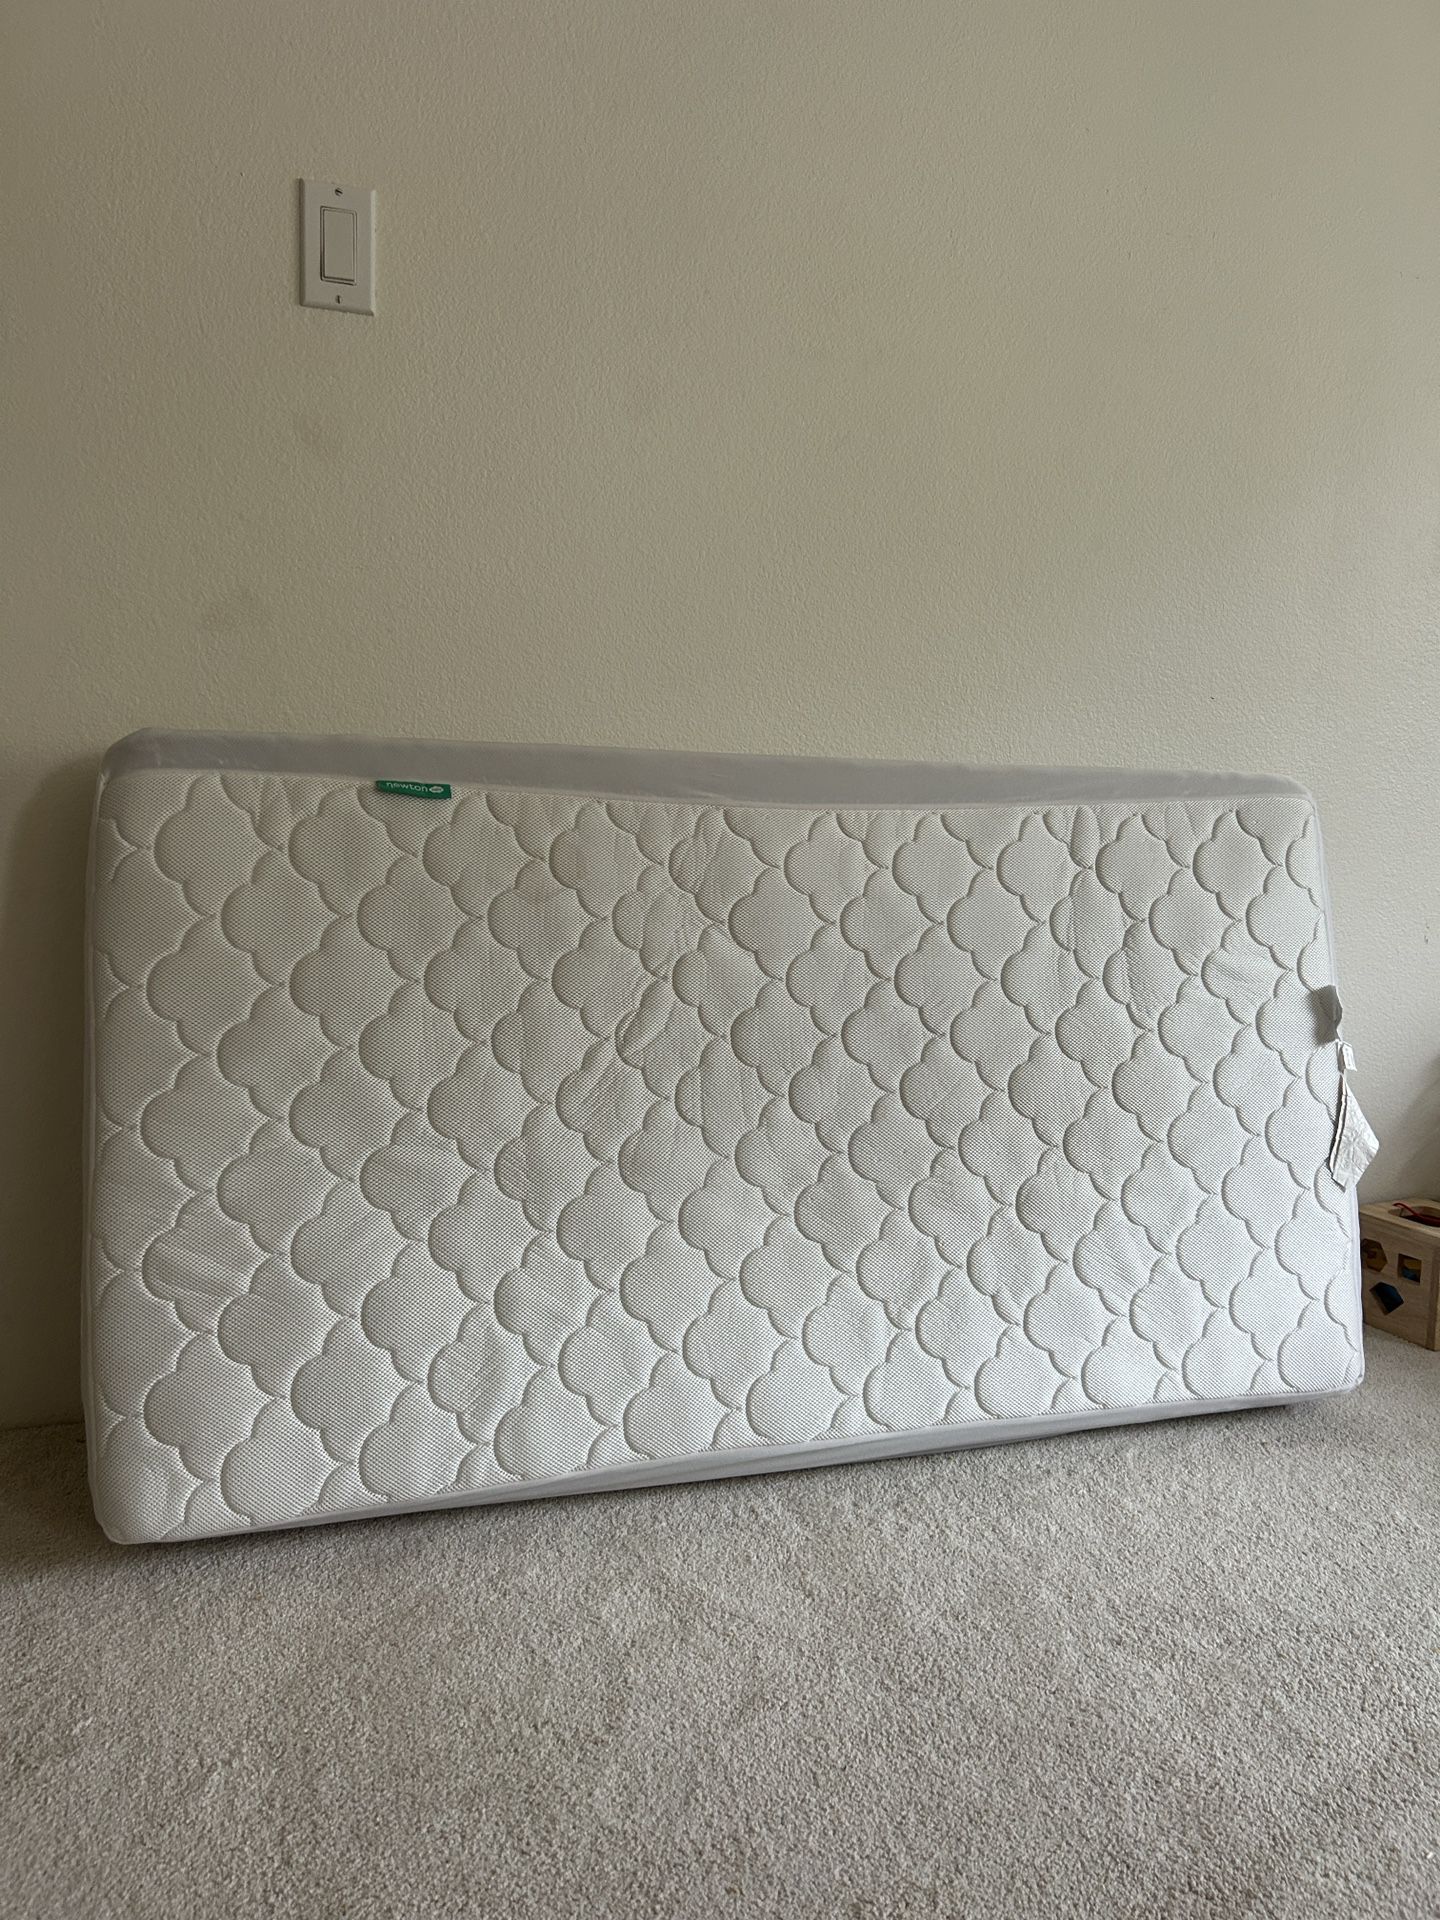 newton mattress and misc crib mattress 